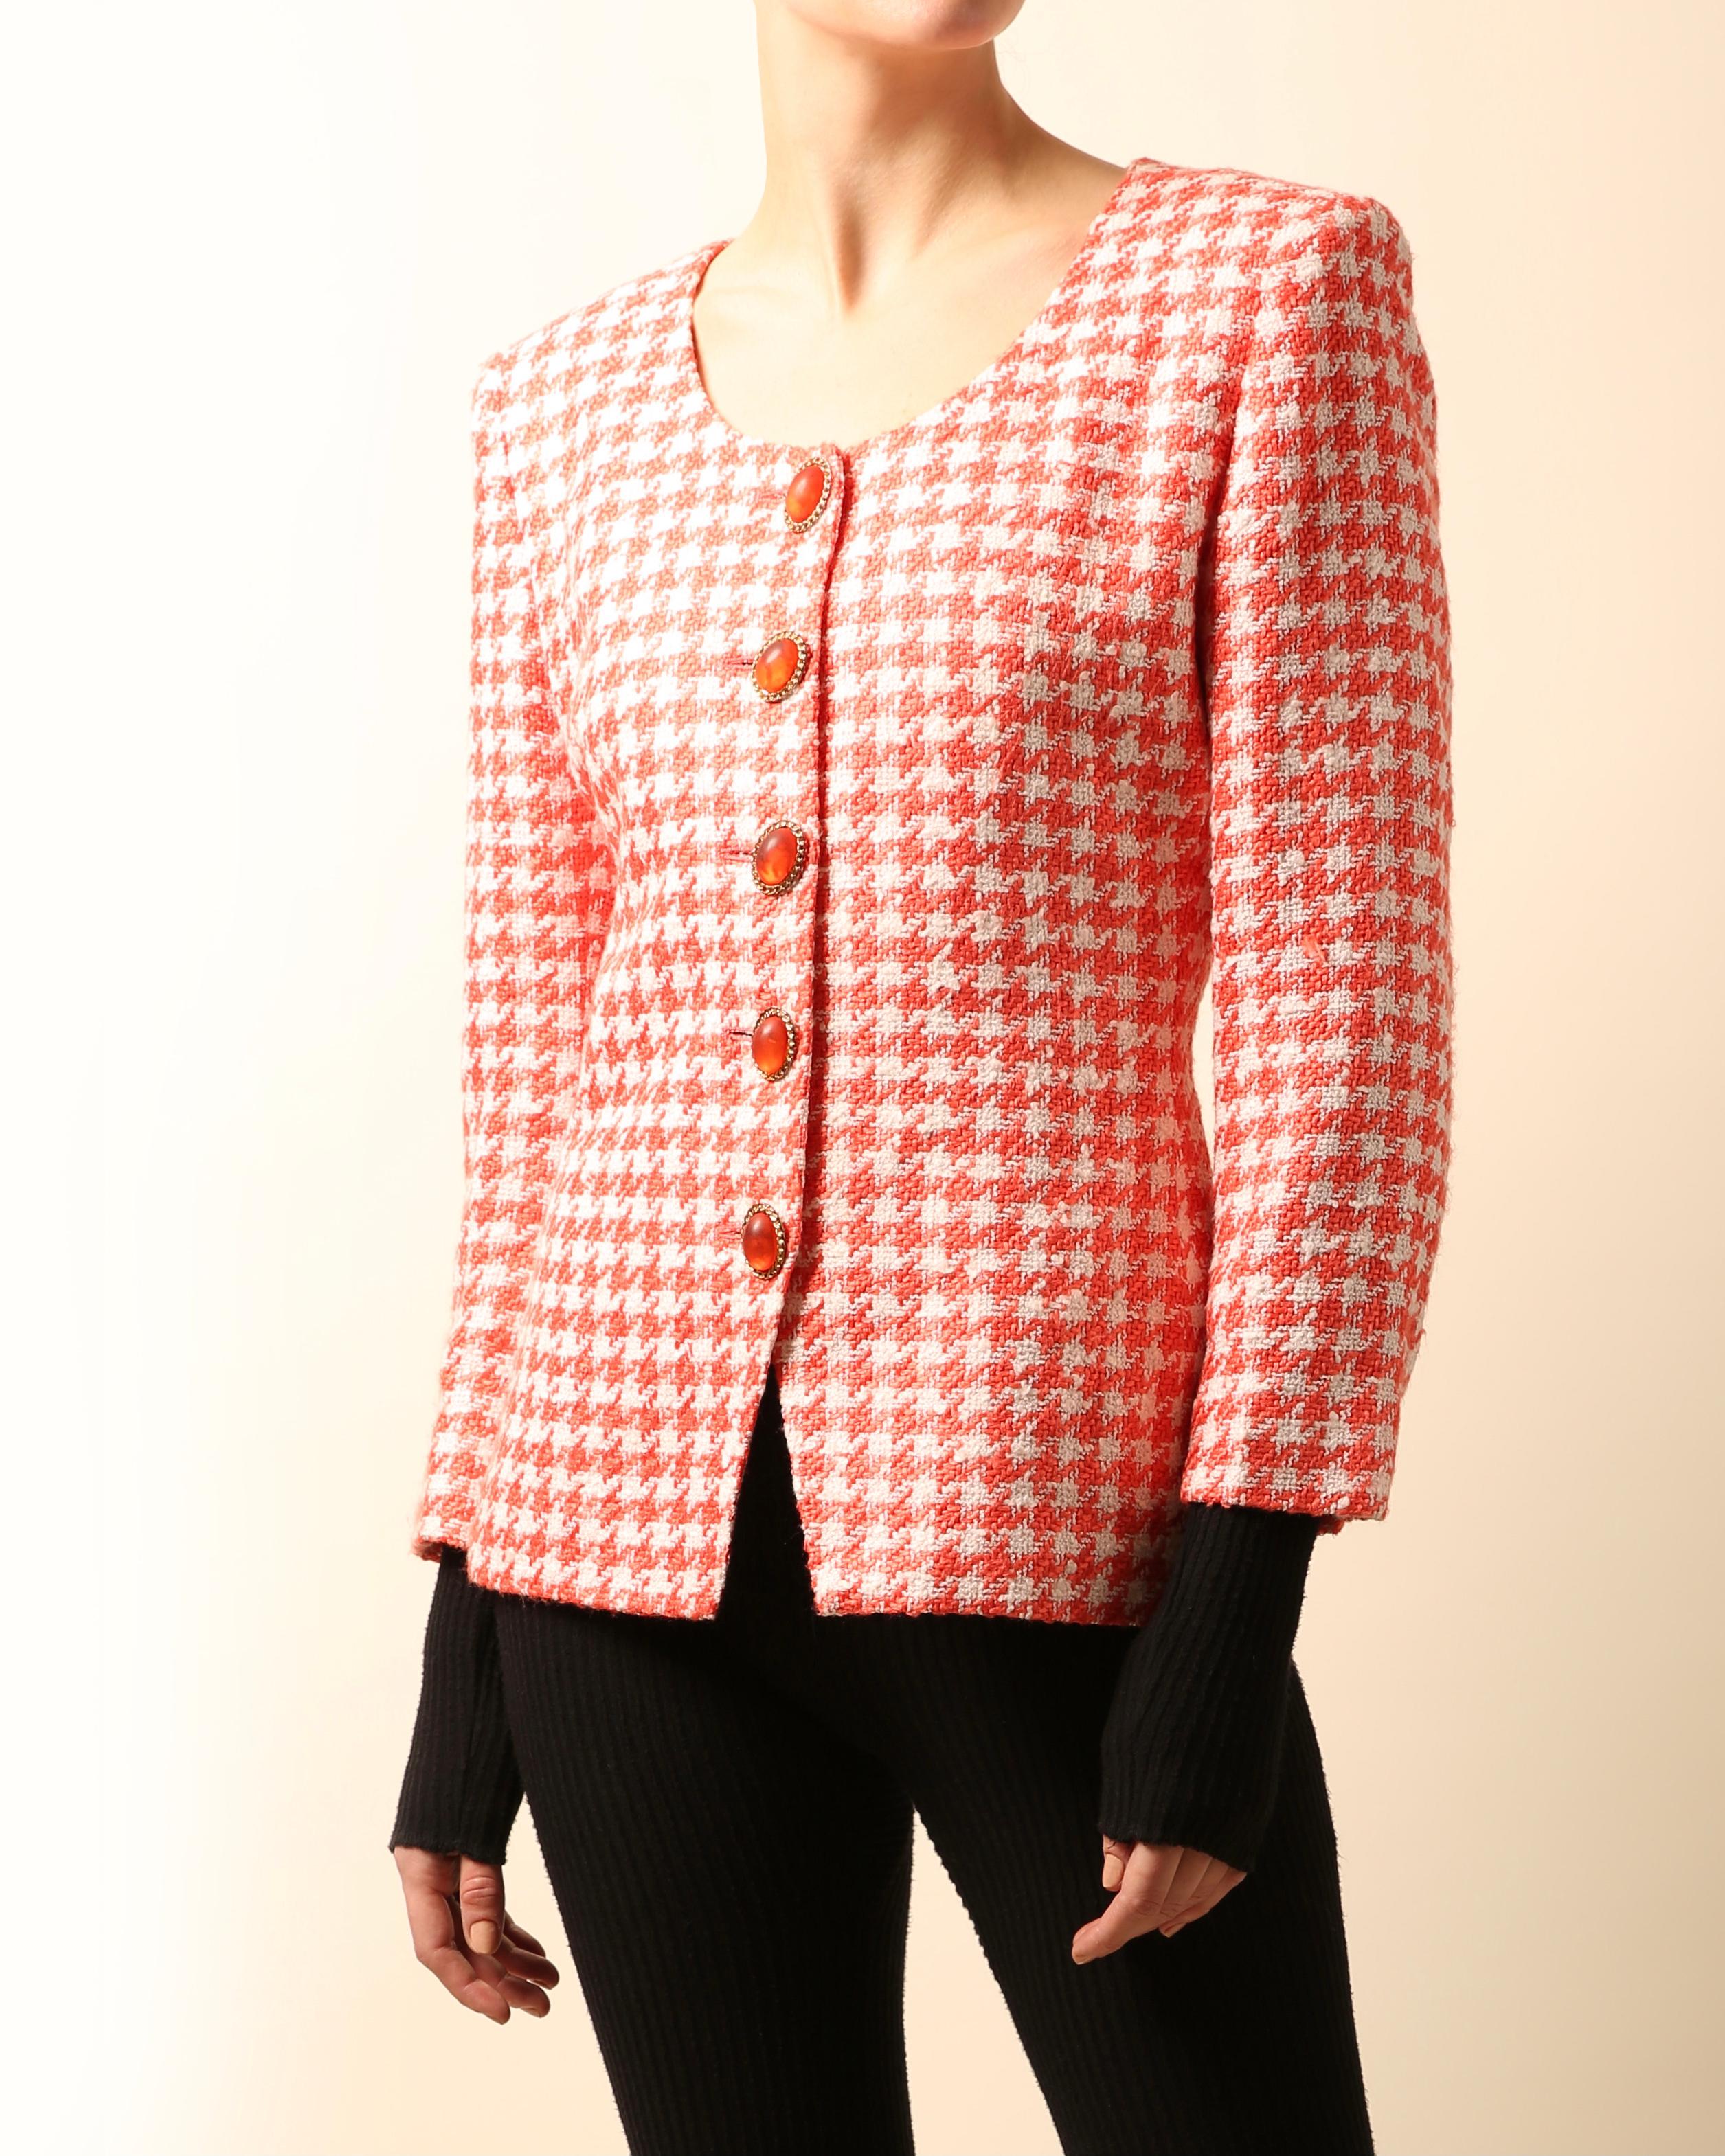 Christian Dior Vintage red white tweed gingham check print jewel blazer jacket For Sale 5